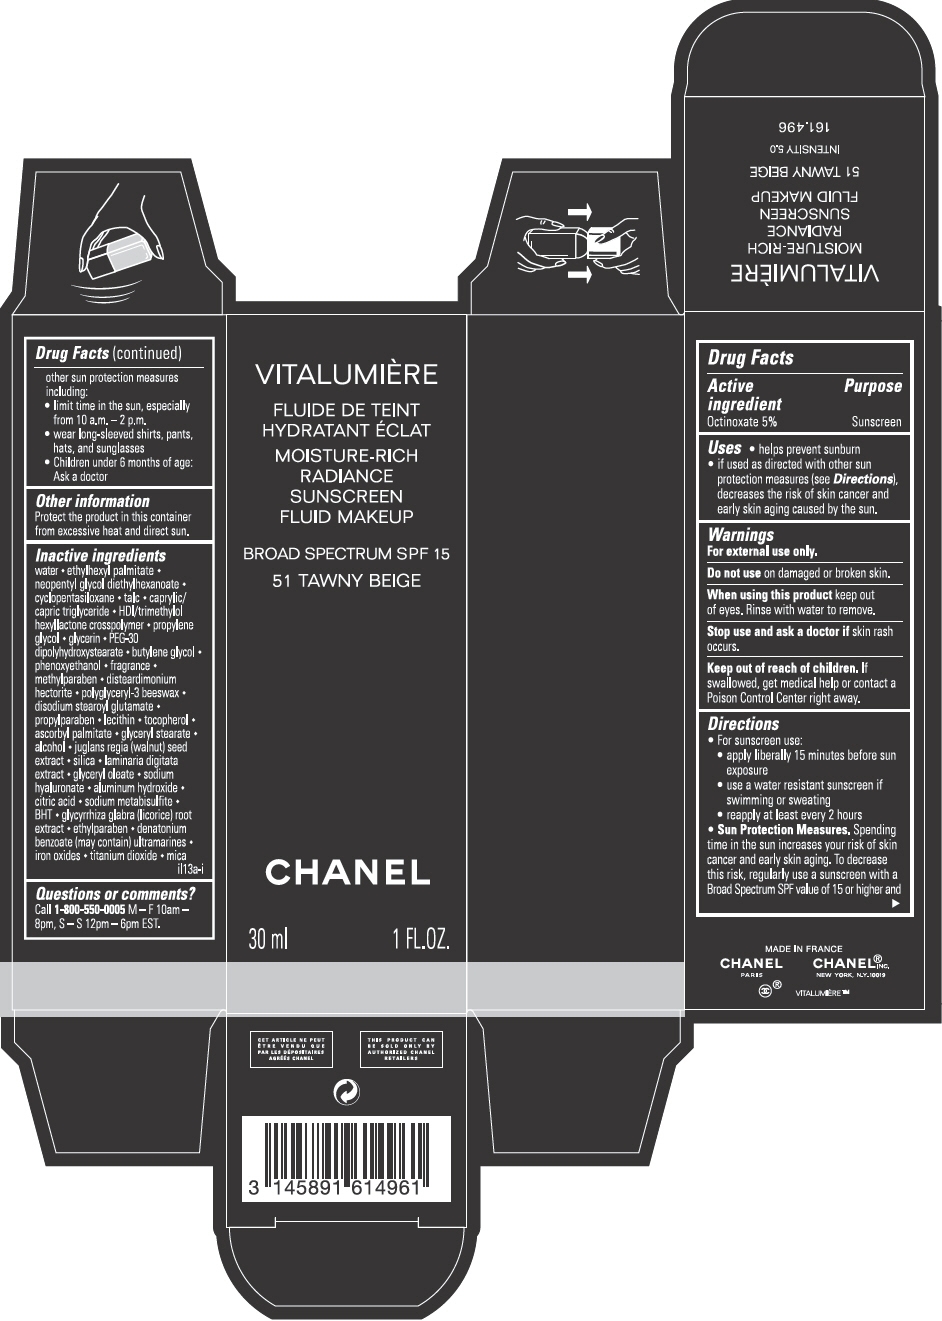 PRINCIPAL DISPLAY PANEL - 30 mL Bottle Carton - 51 Tawny Beige